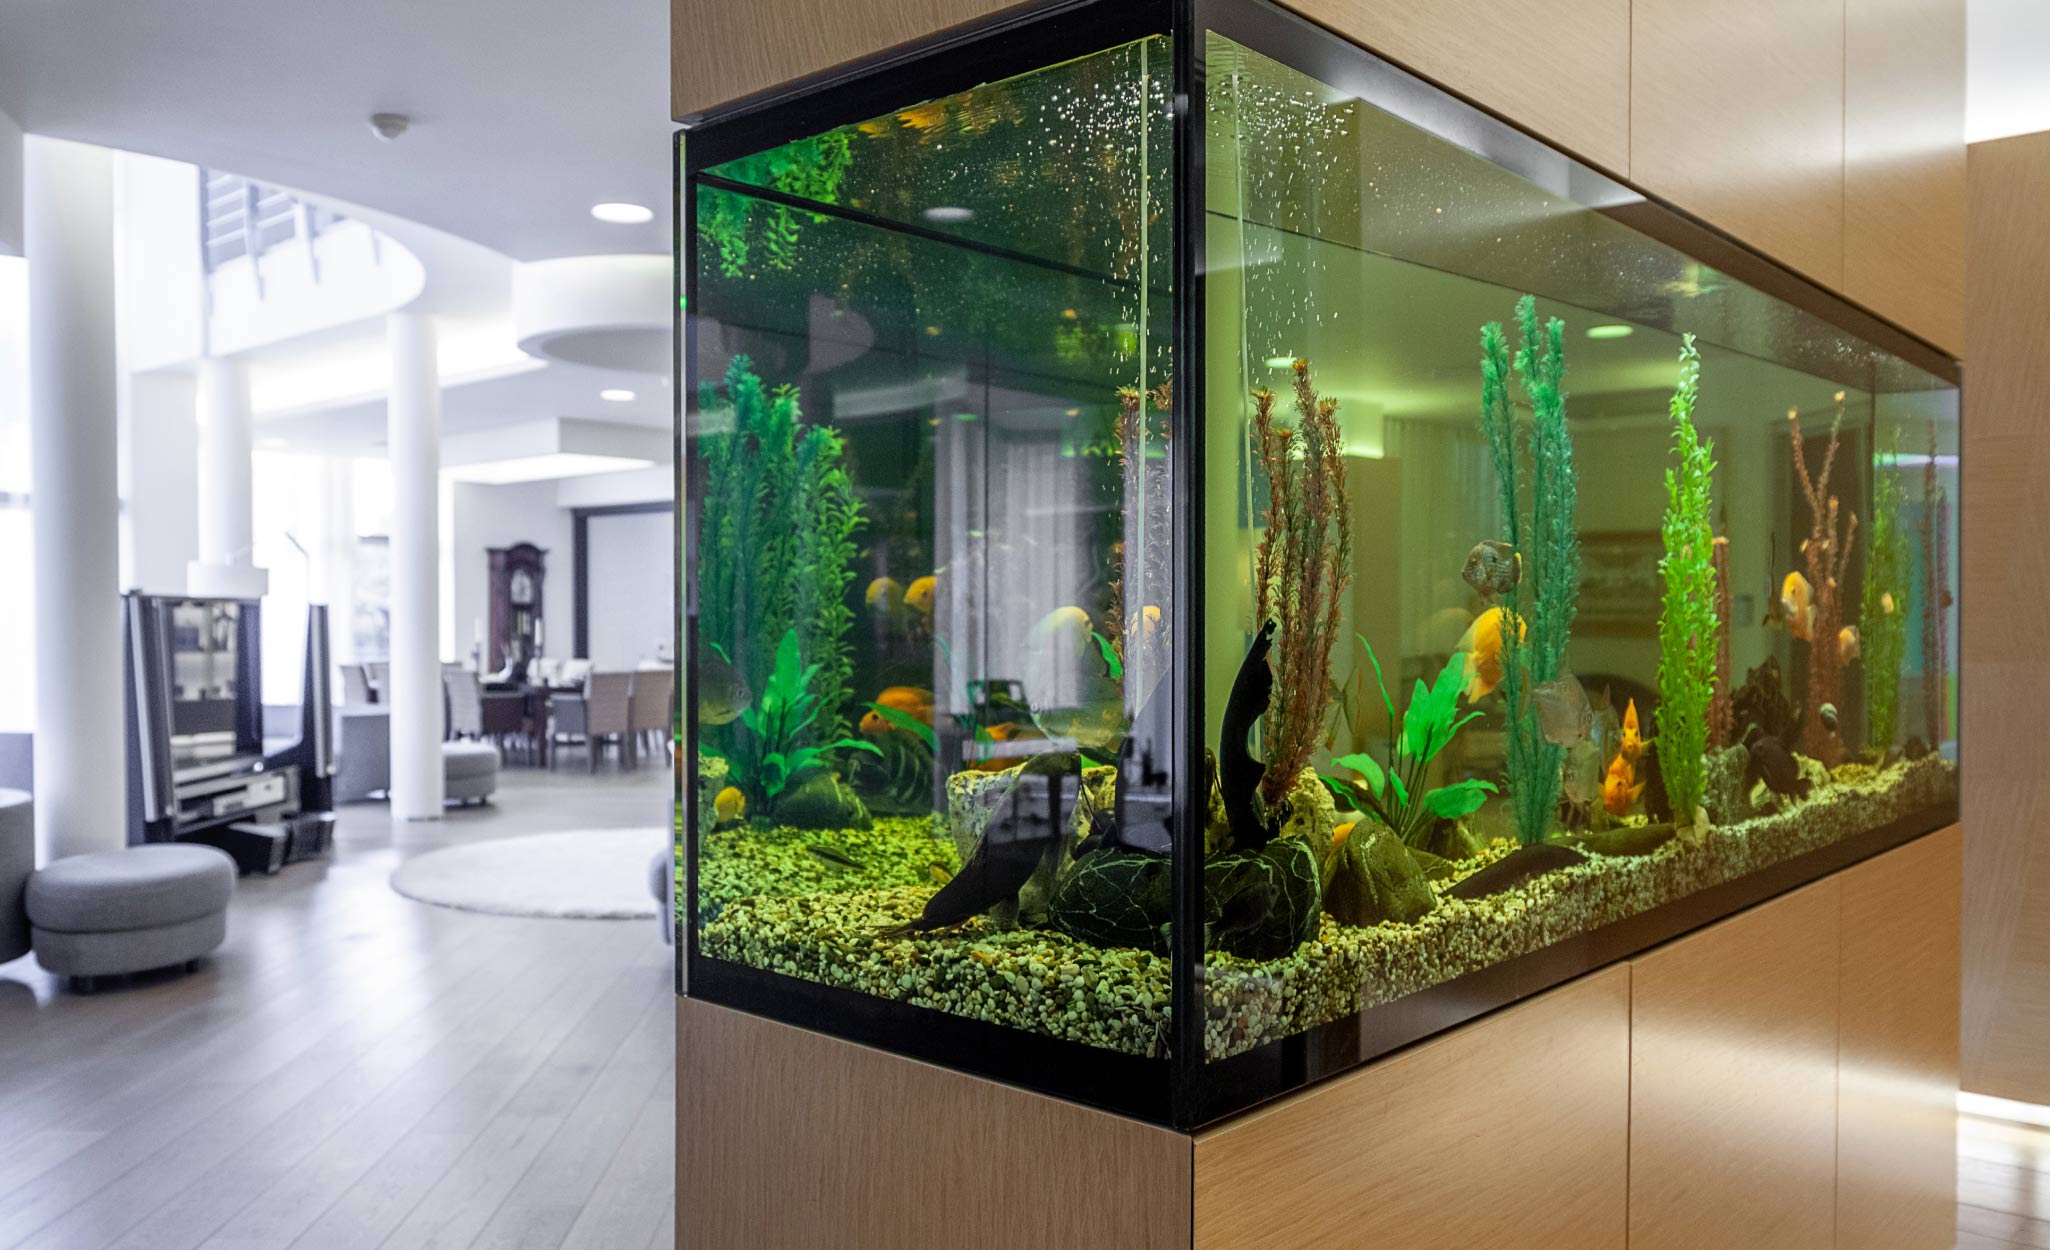 A large aquarium provides a striking decorative element.